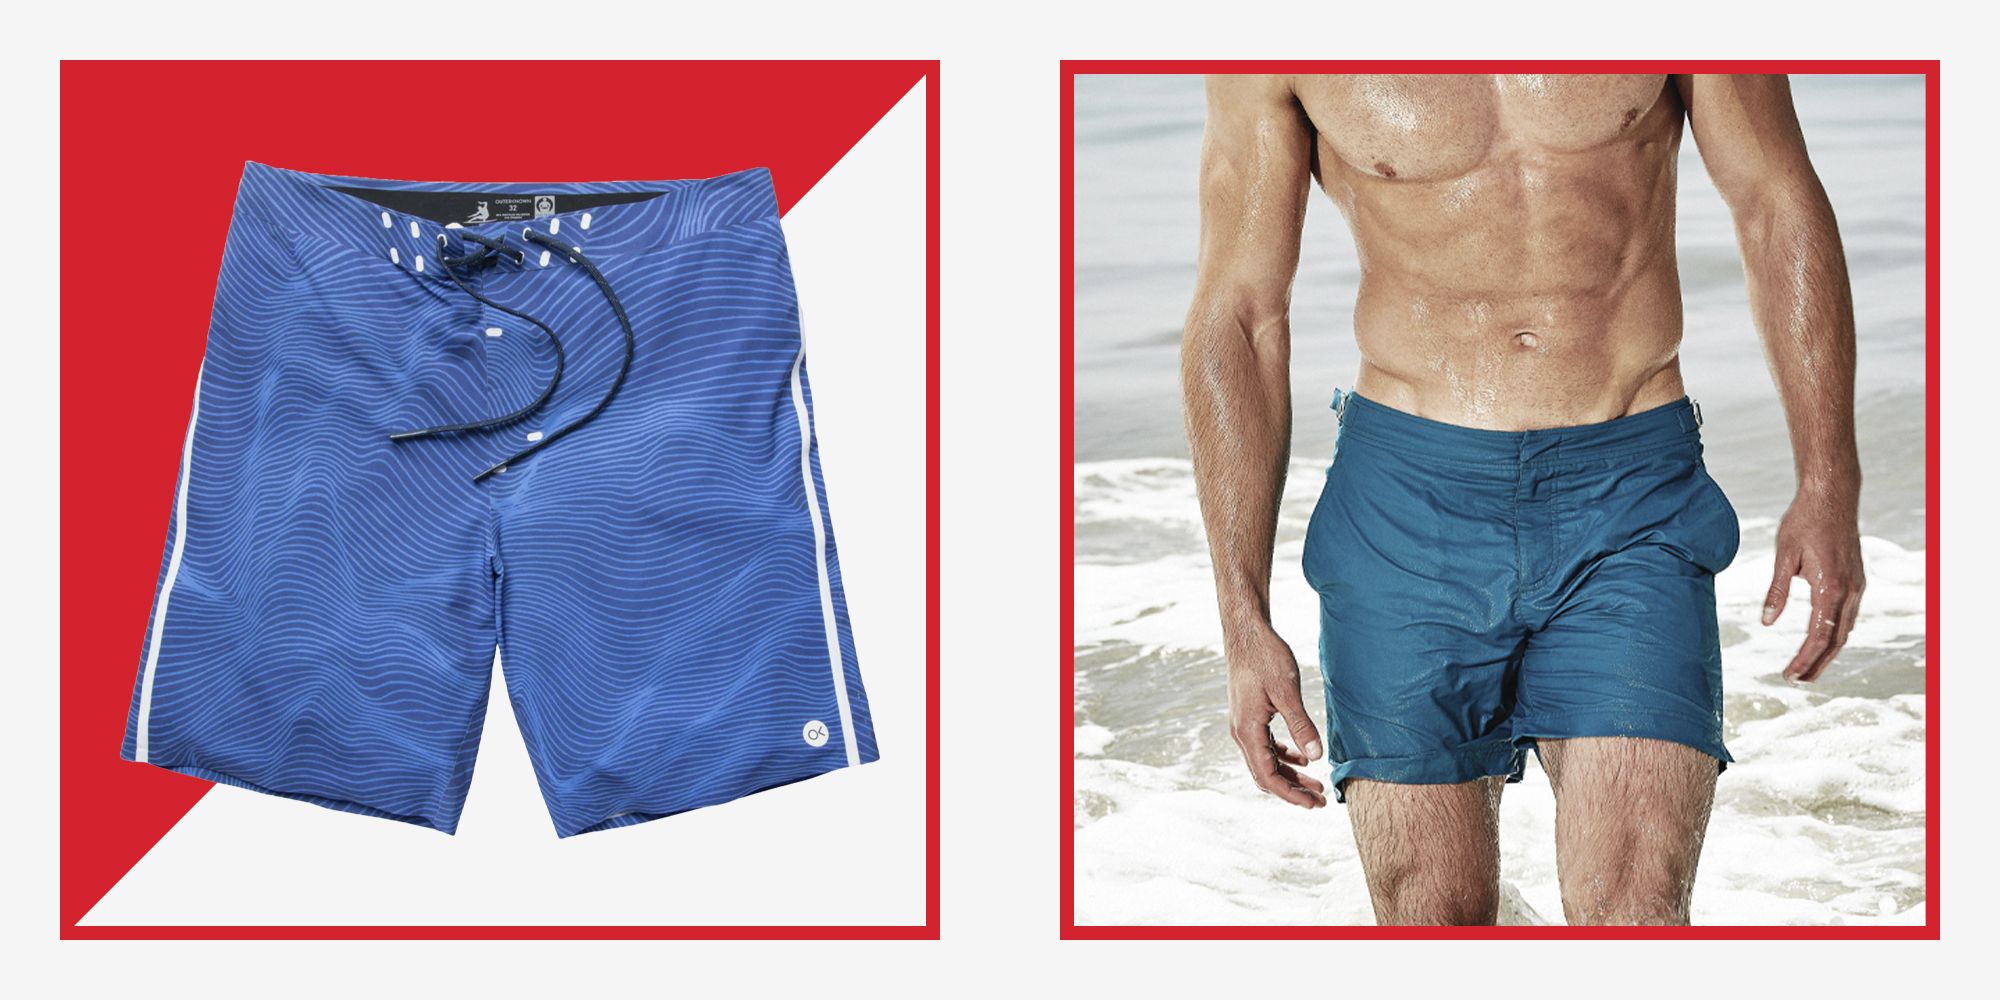 Signature Swim Board Shorts - Luxury Blue